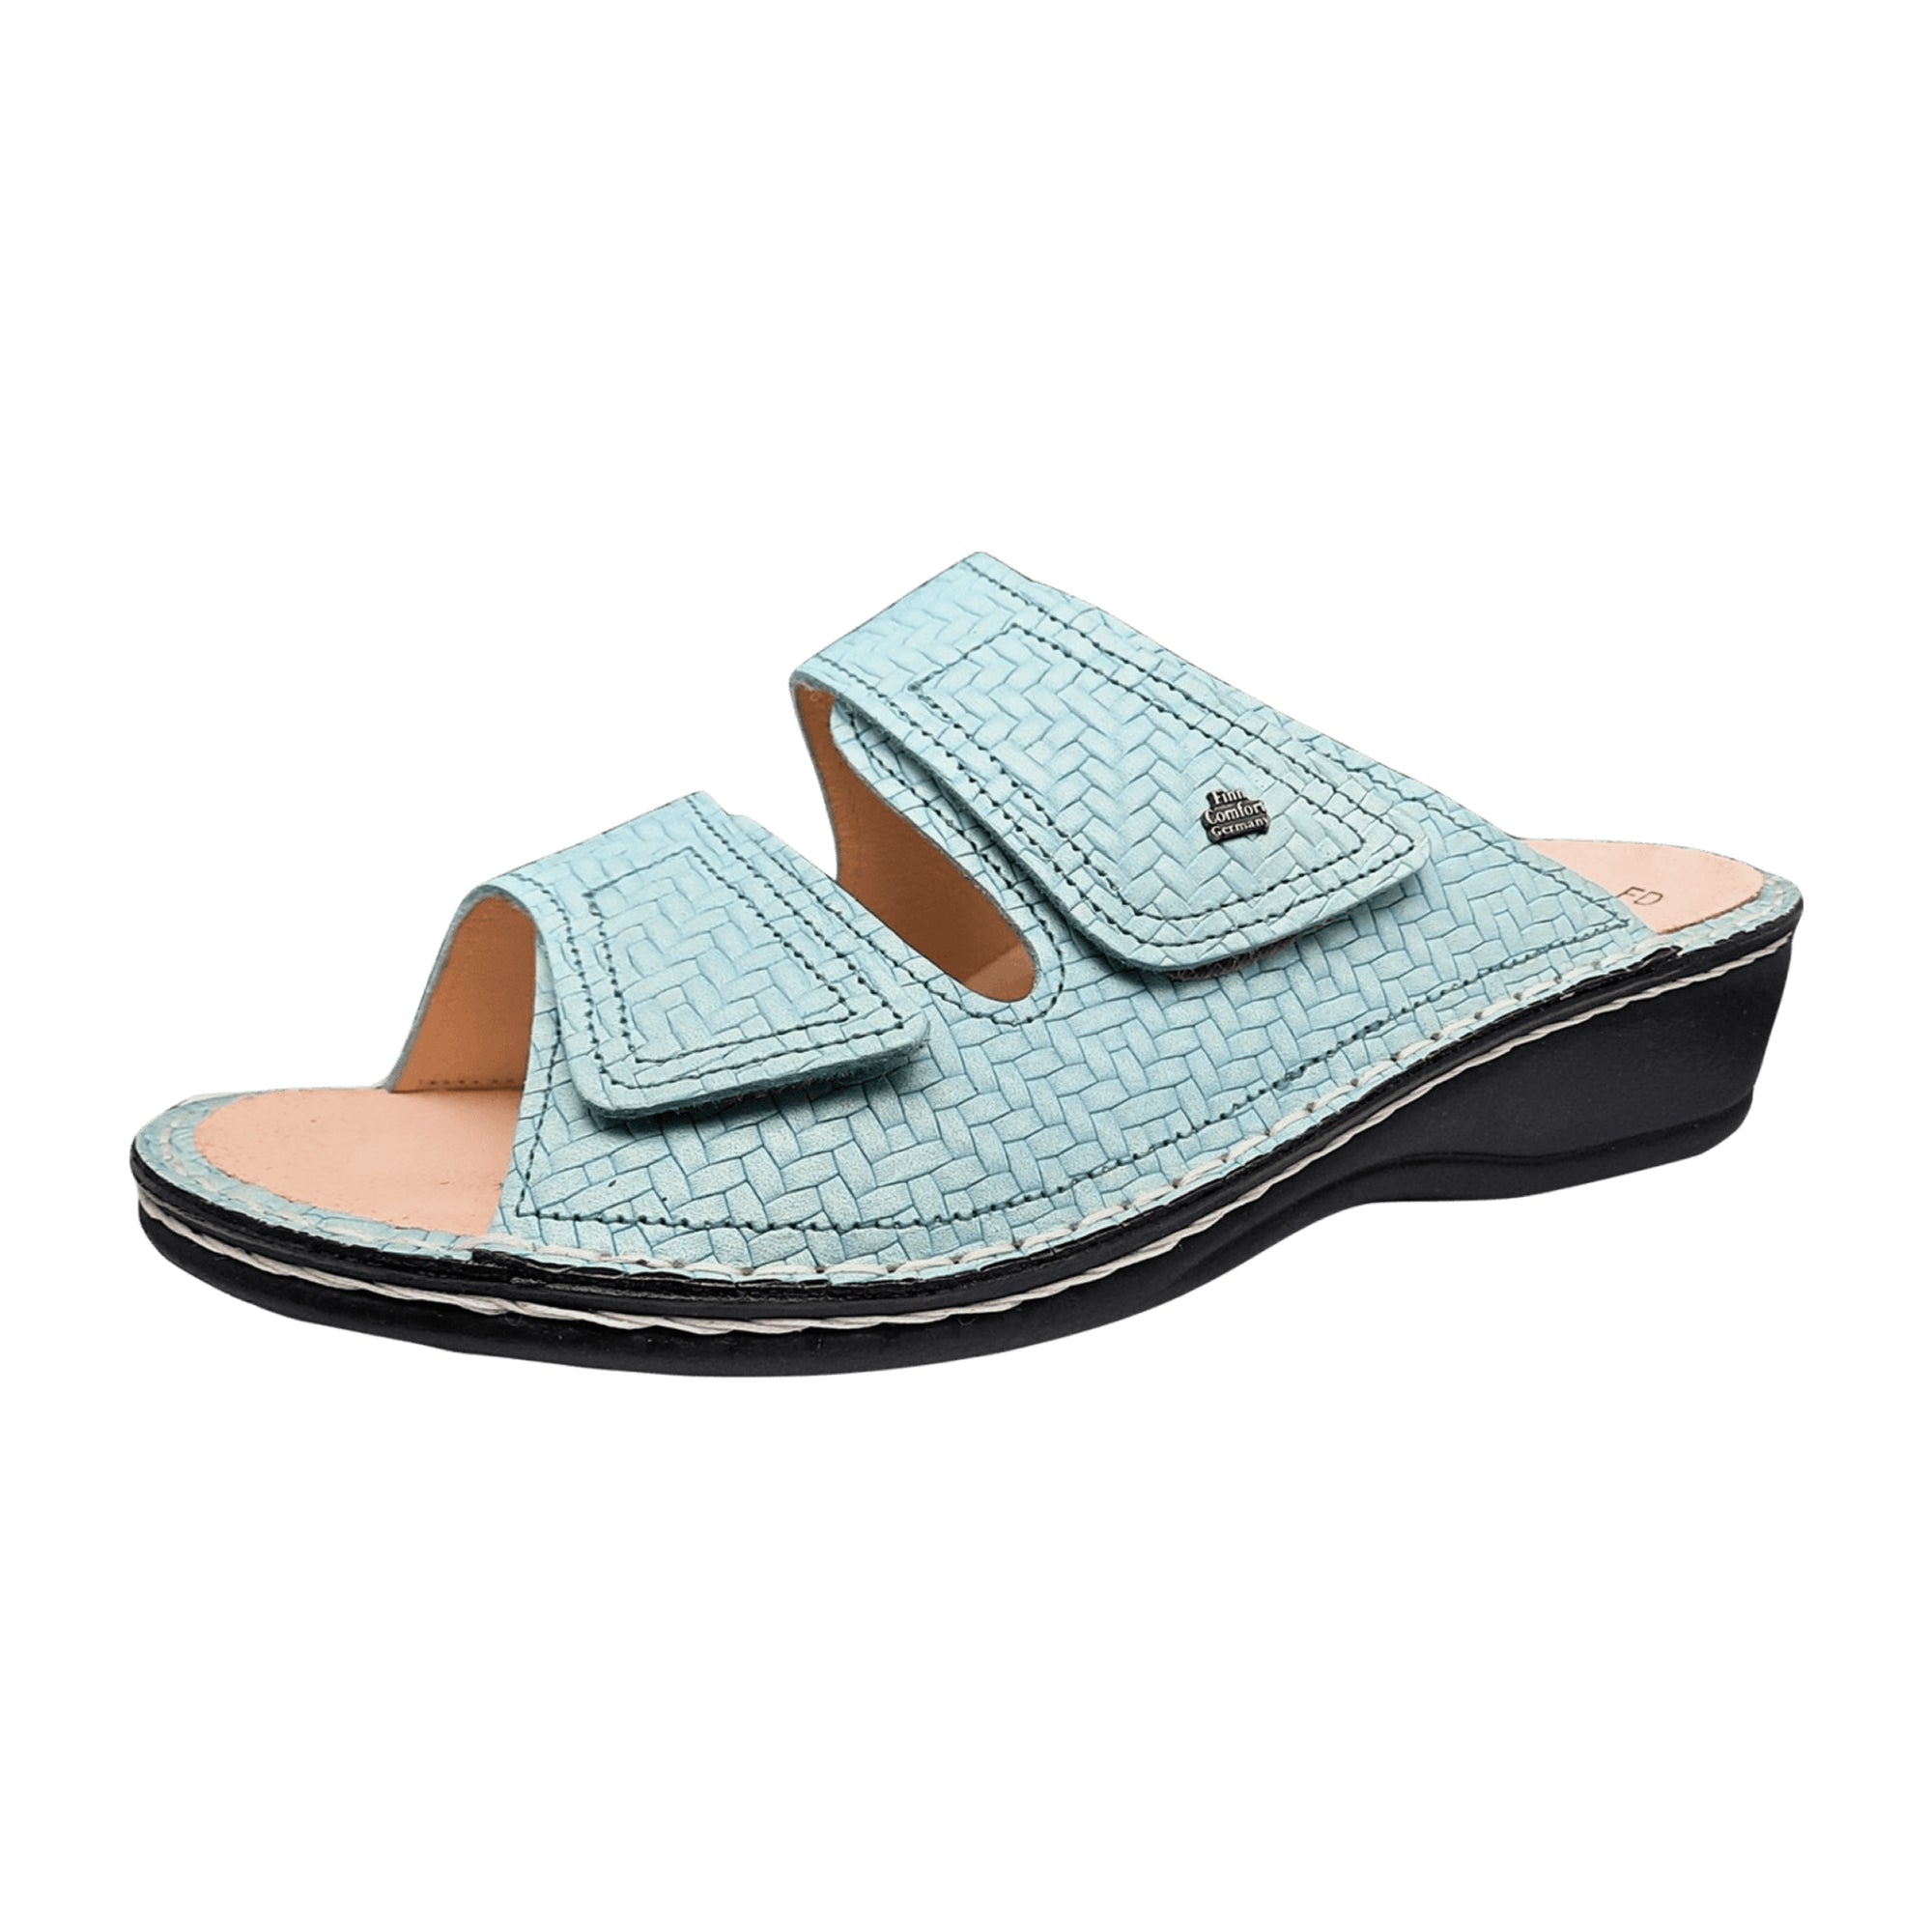 Finn Comfort Jamaica Women's Sandals, Stylish Turquoise – Comfort & Durability